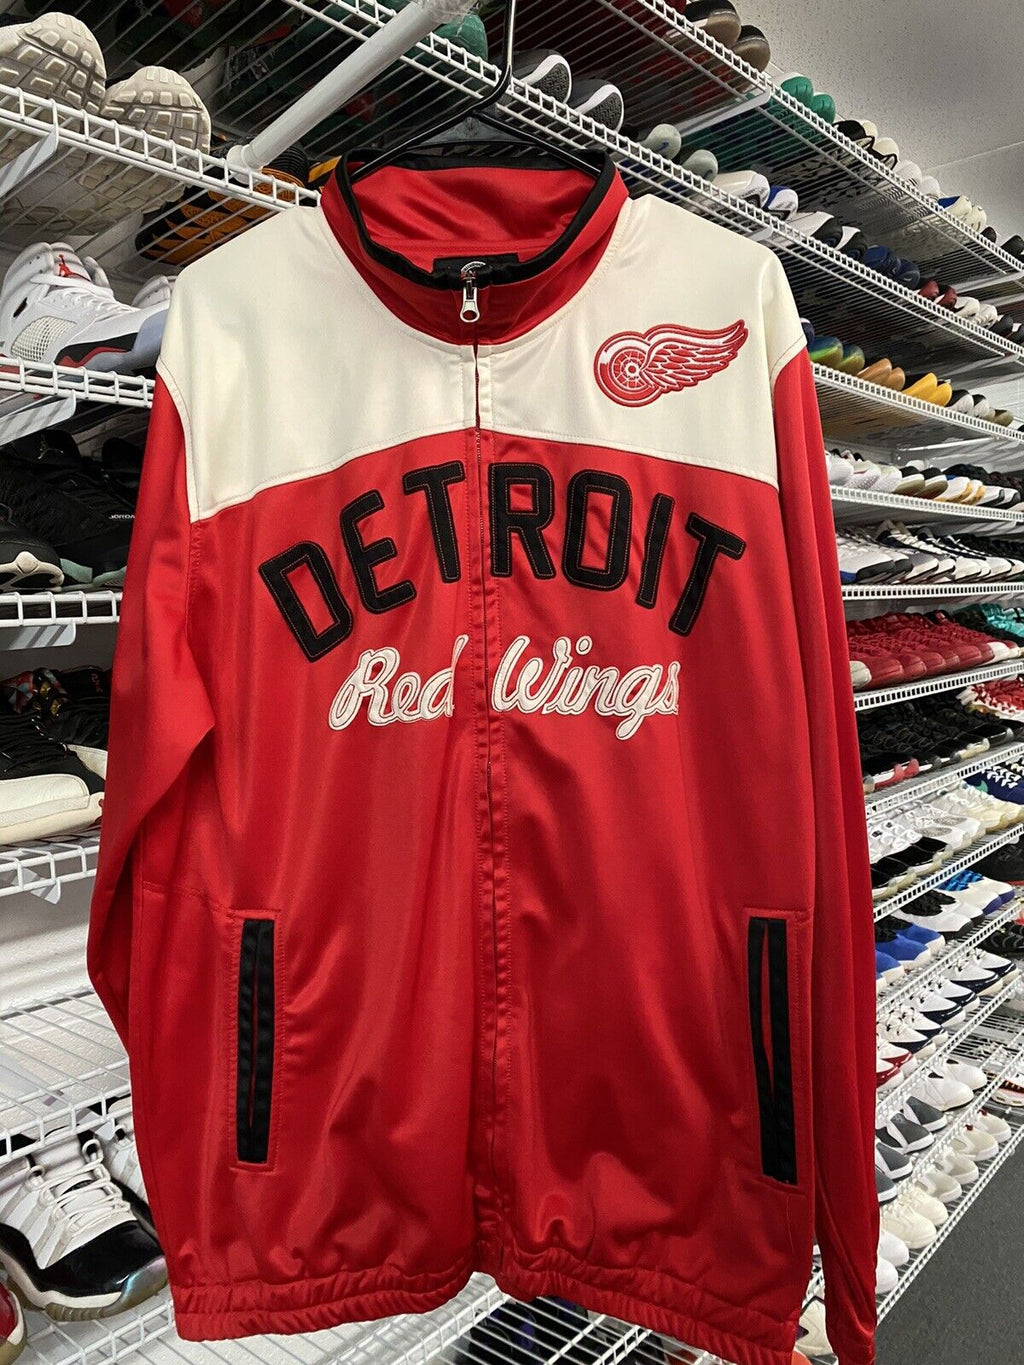 Vintage 2000sƒ?? Detroit Redwings G3 Sports by Carl Banks Track Jacket Size Large - Hype Stew Sneakers Detroit